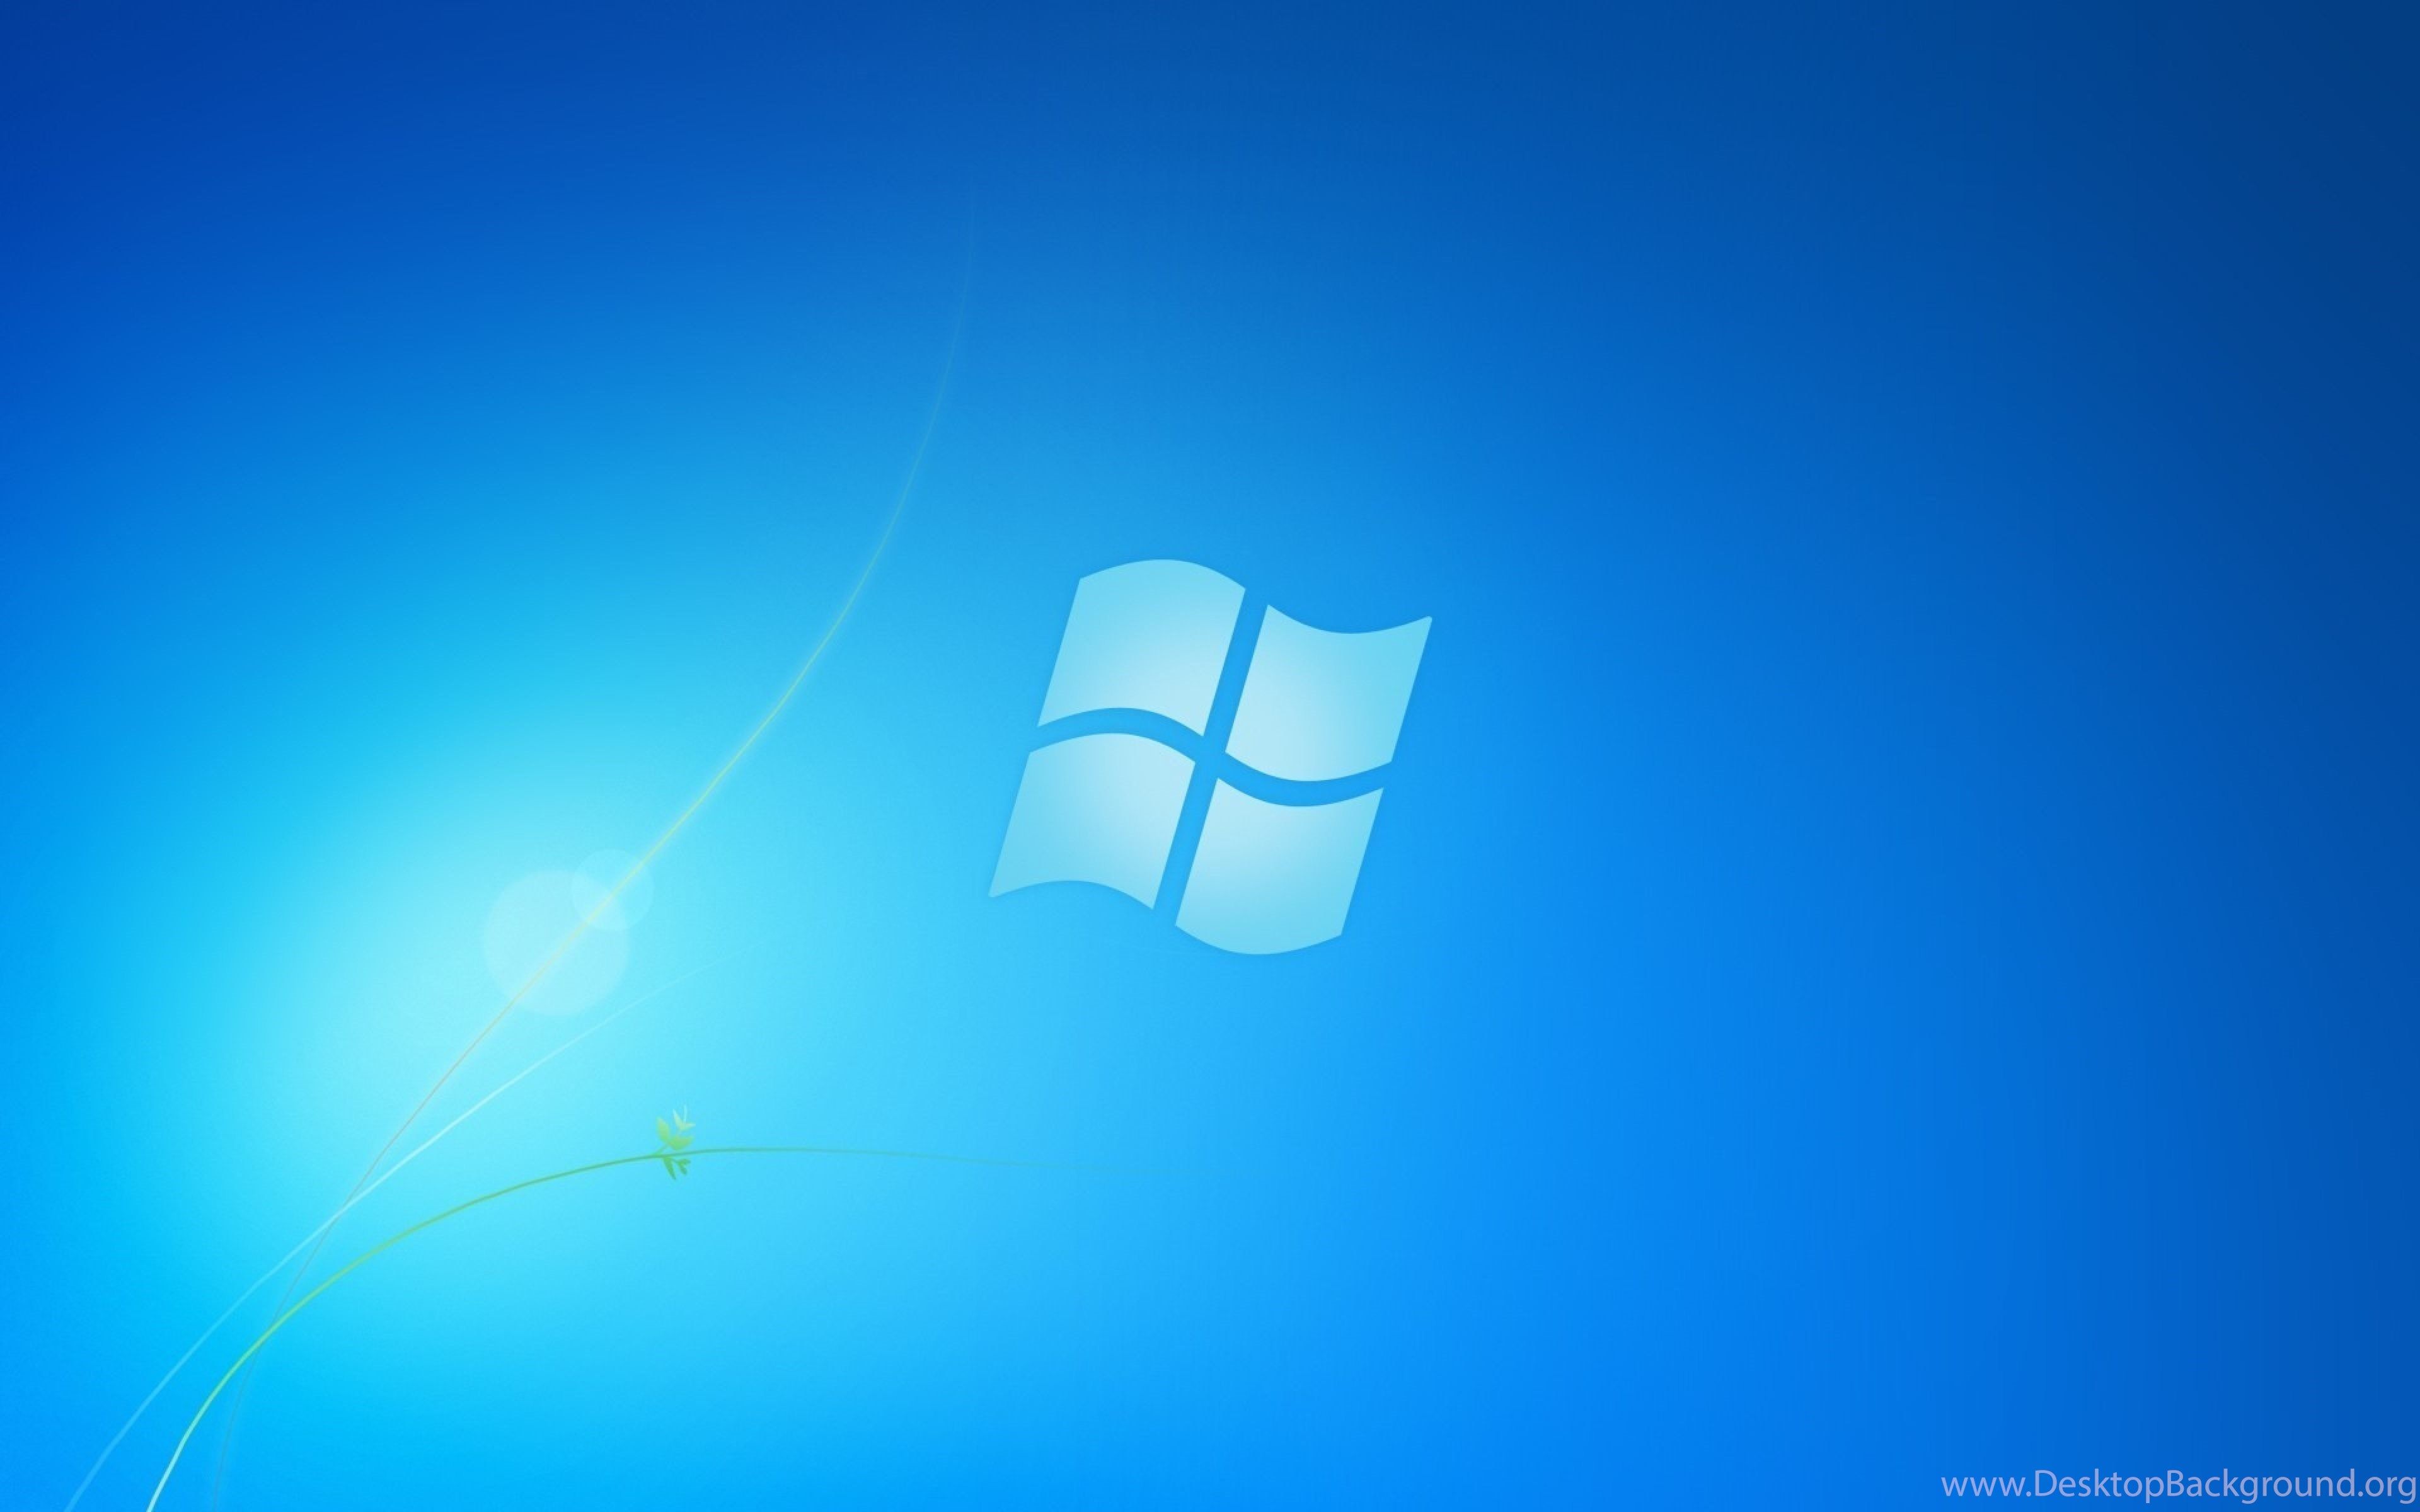 Windows 7 Wallpaper HD Download For Desktop In High Quality Desktop Background